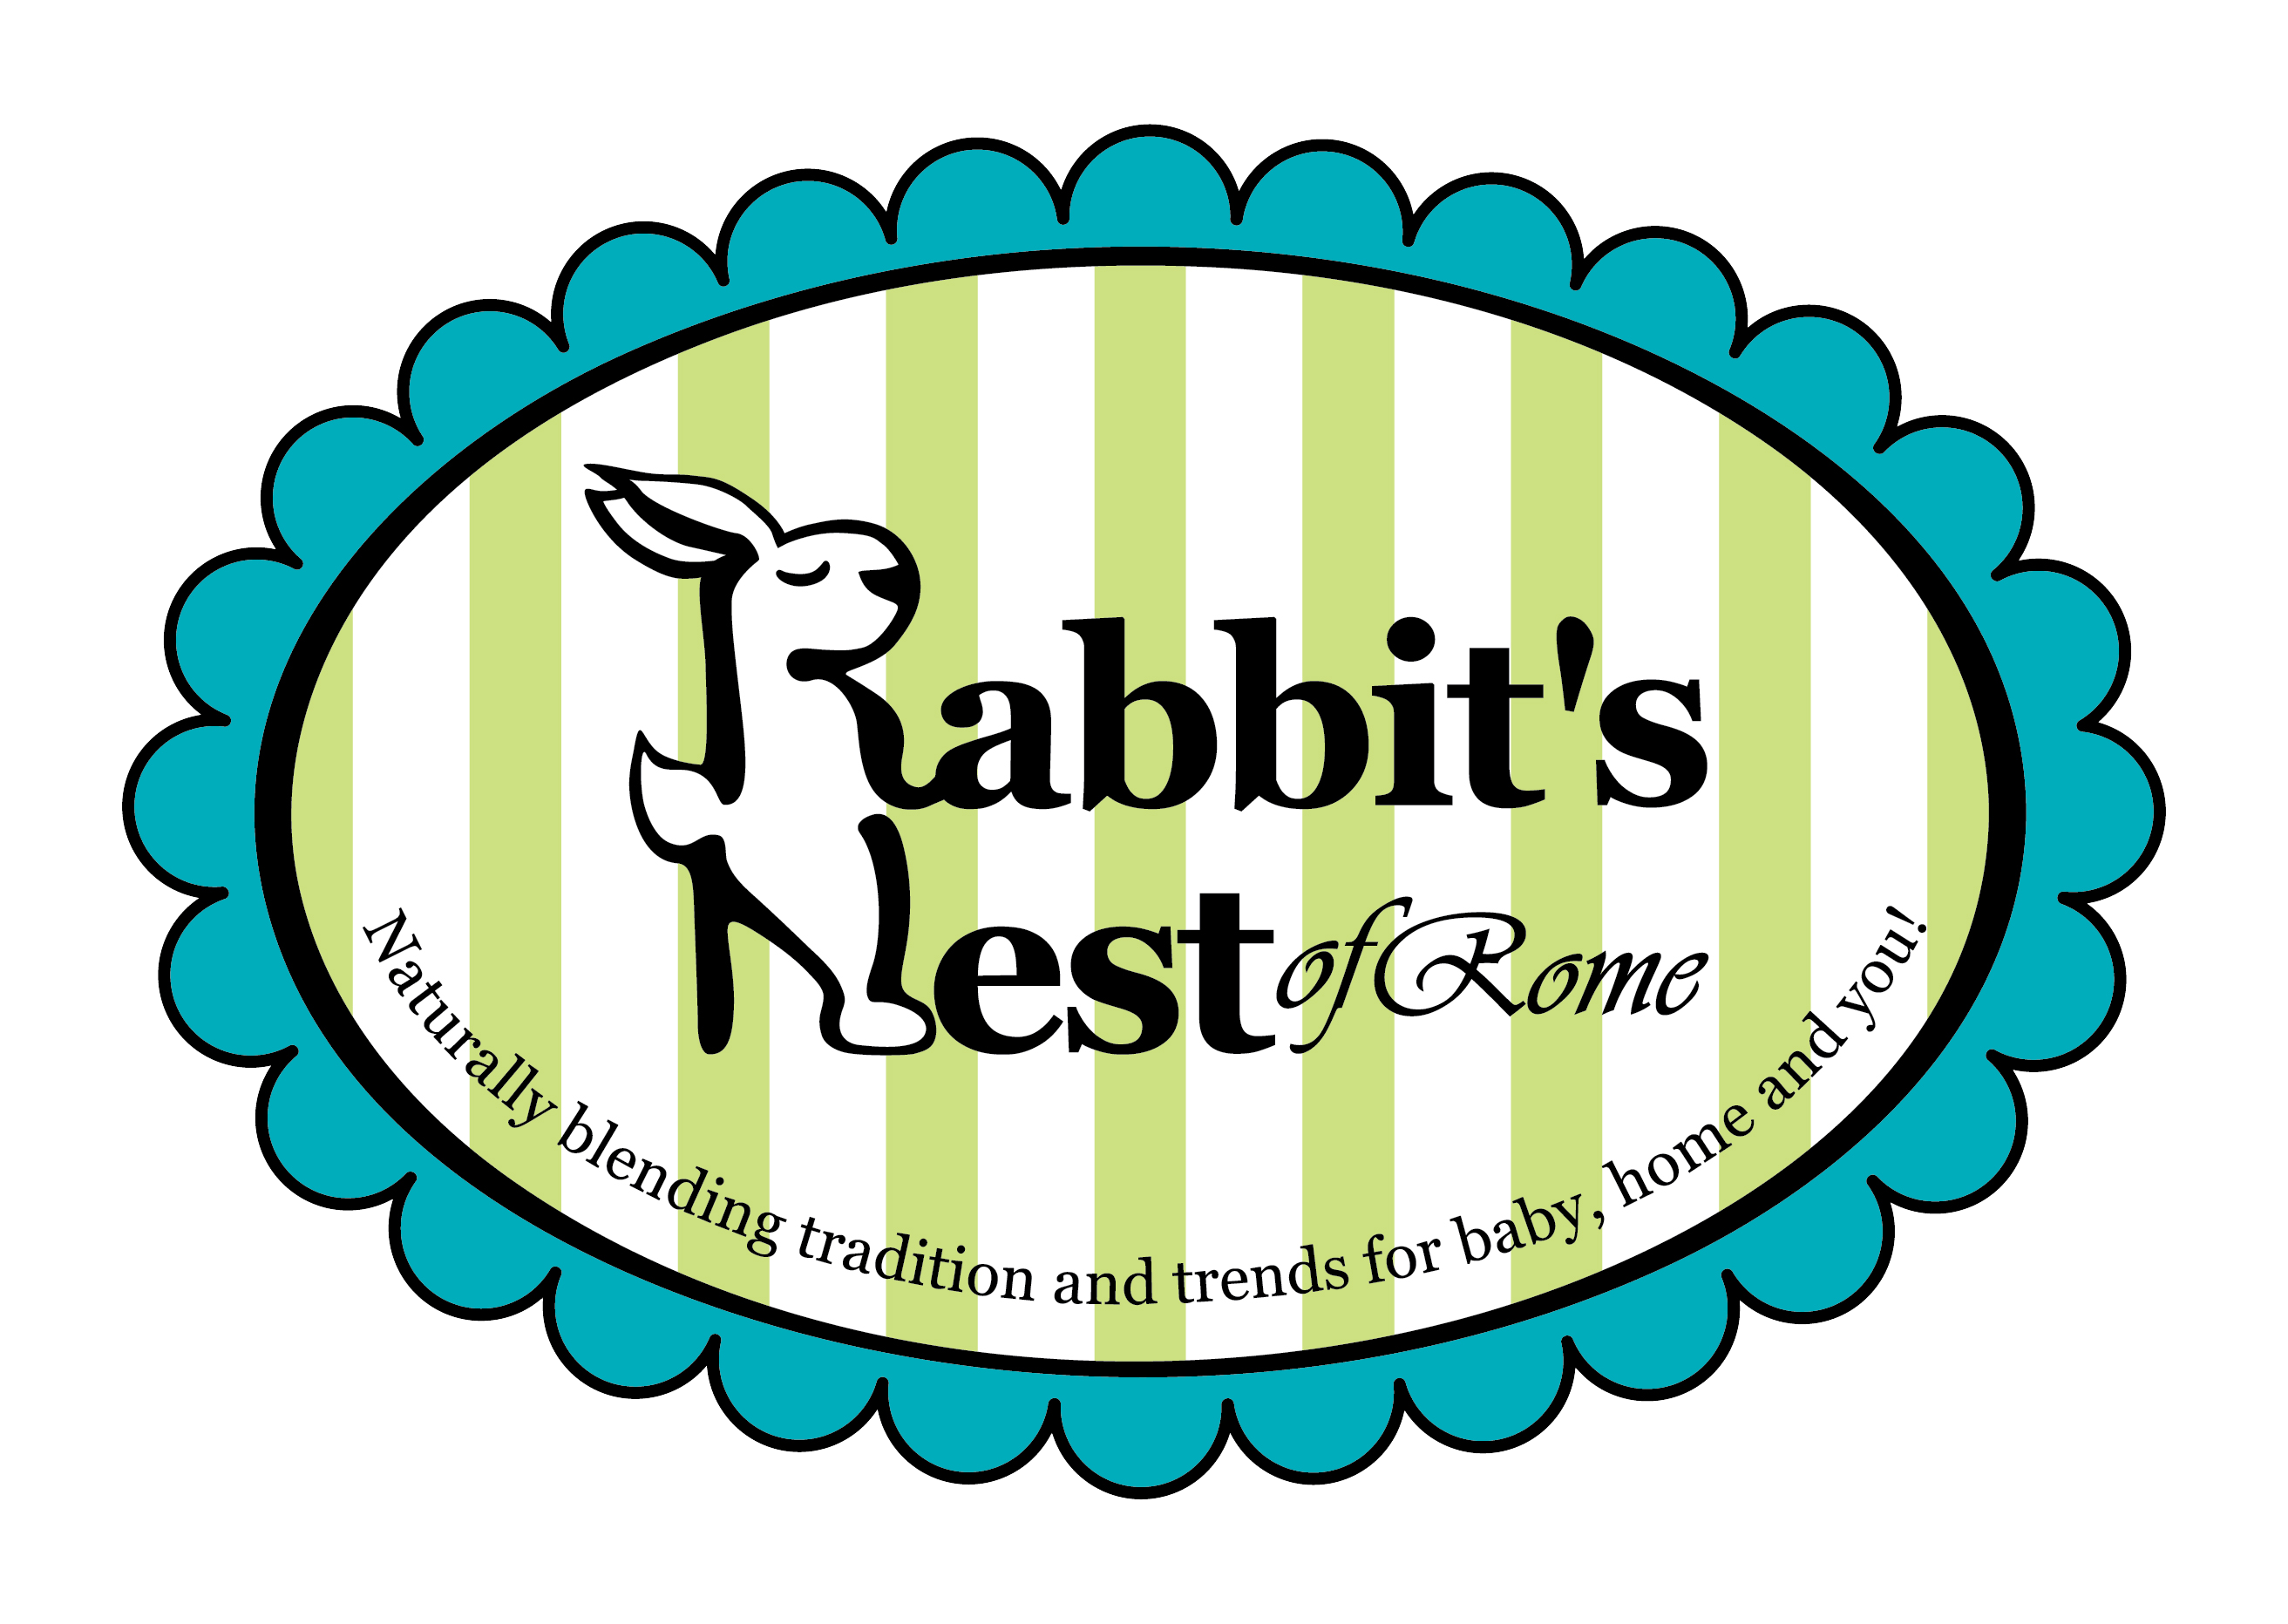 Rabbit's Nest logo